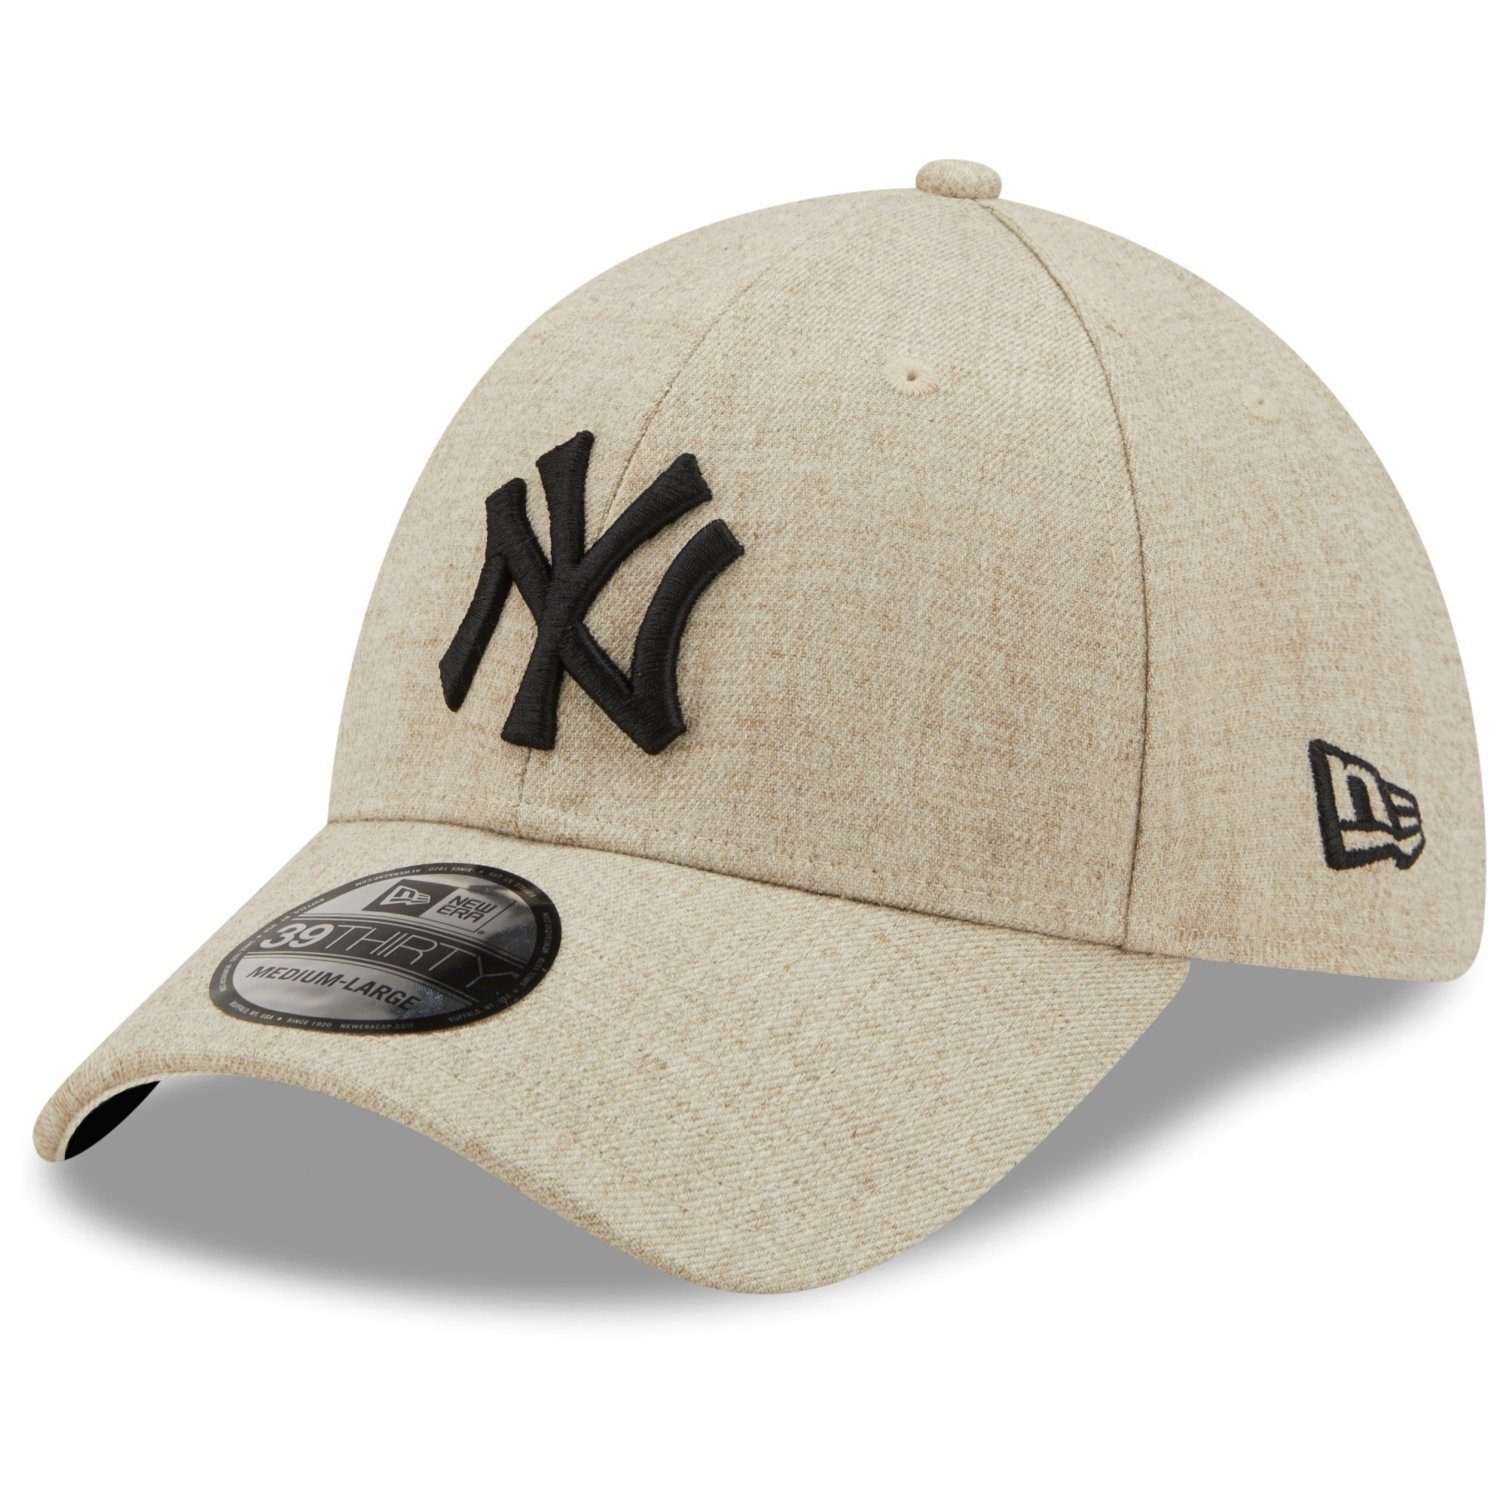 New Era Flex Cap 39Thirty New York Yankees heather